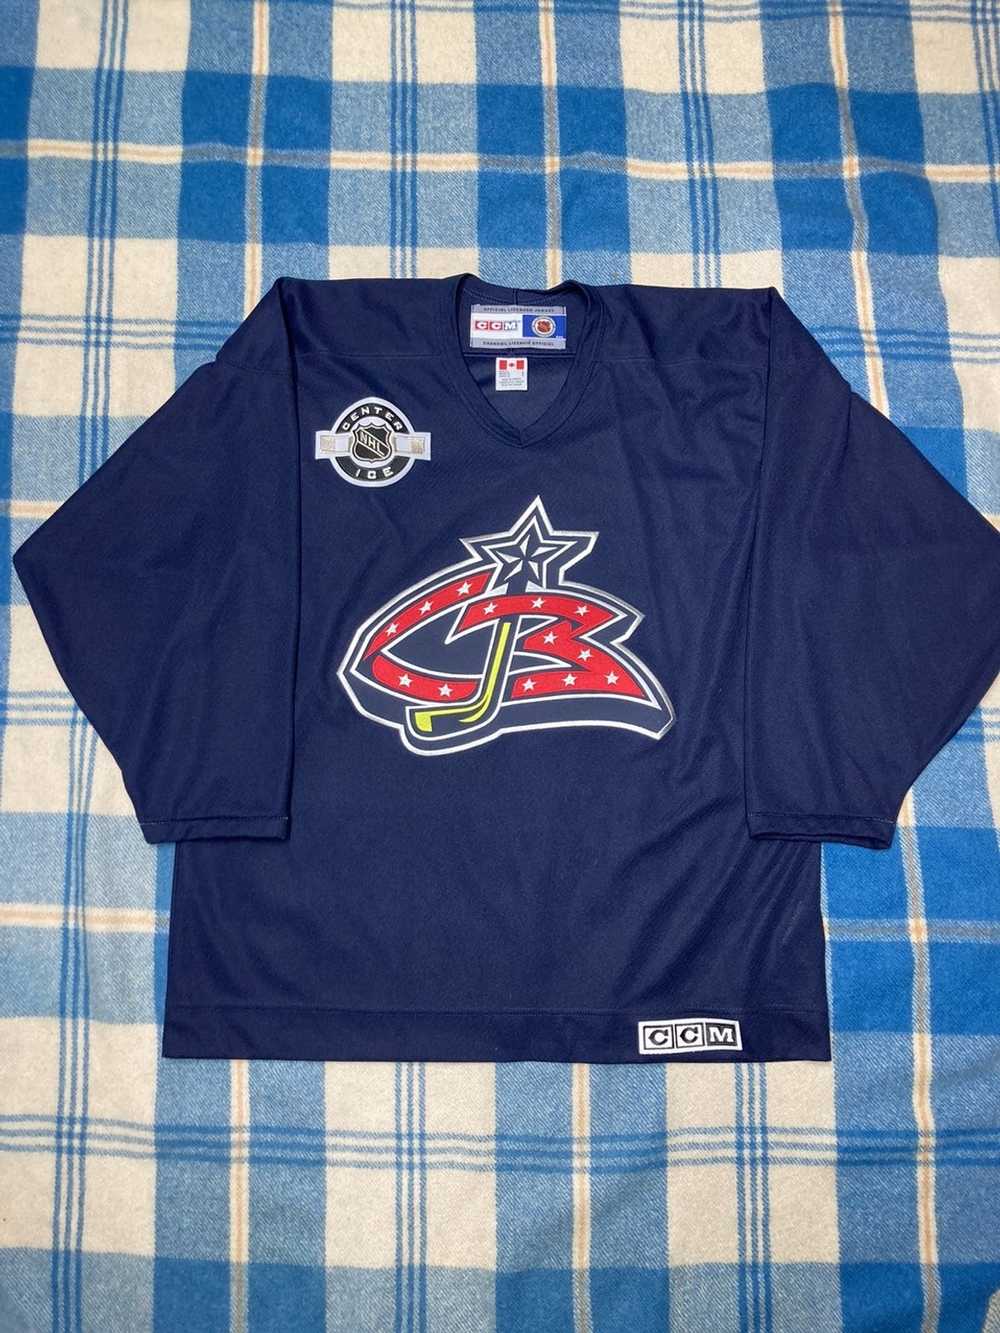 Vintage Columbus Blue Jackets White Hockey Jersey CCM Youth NHL Size L/XL